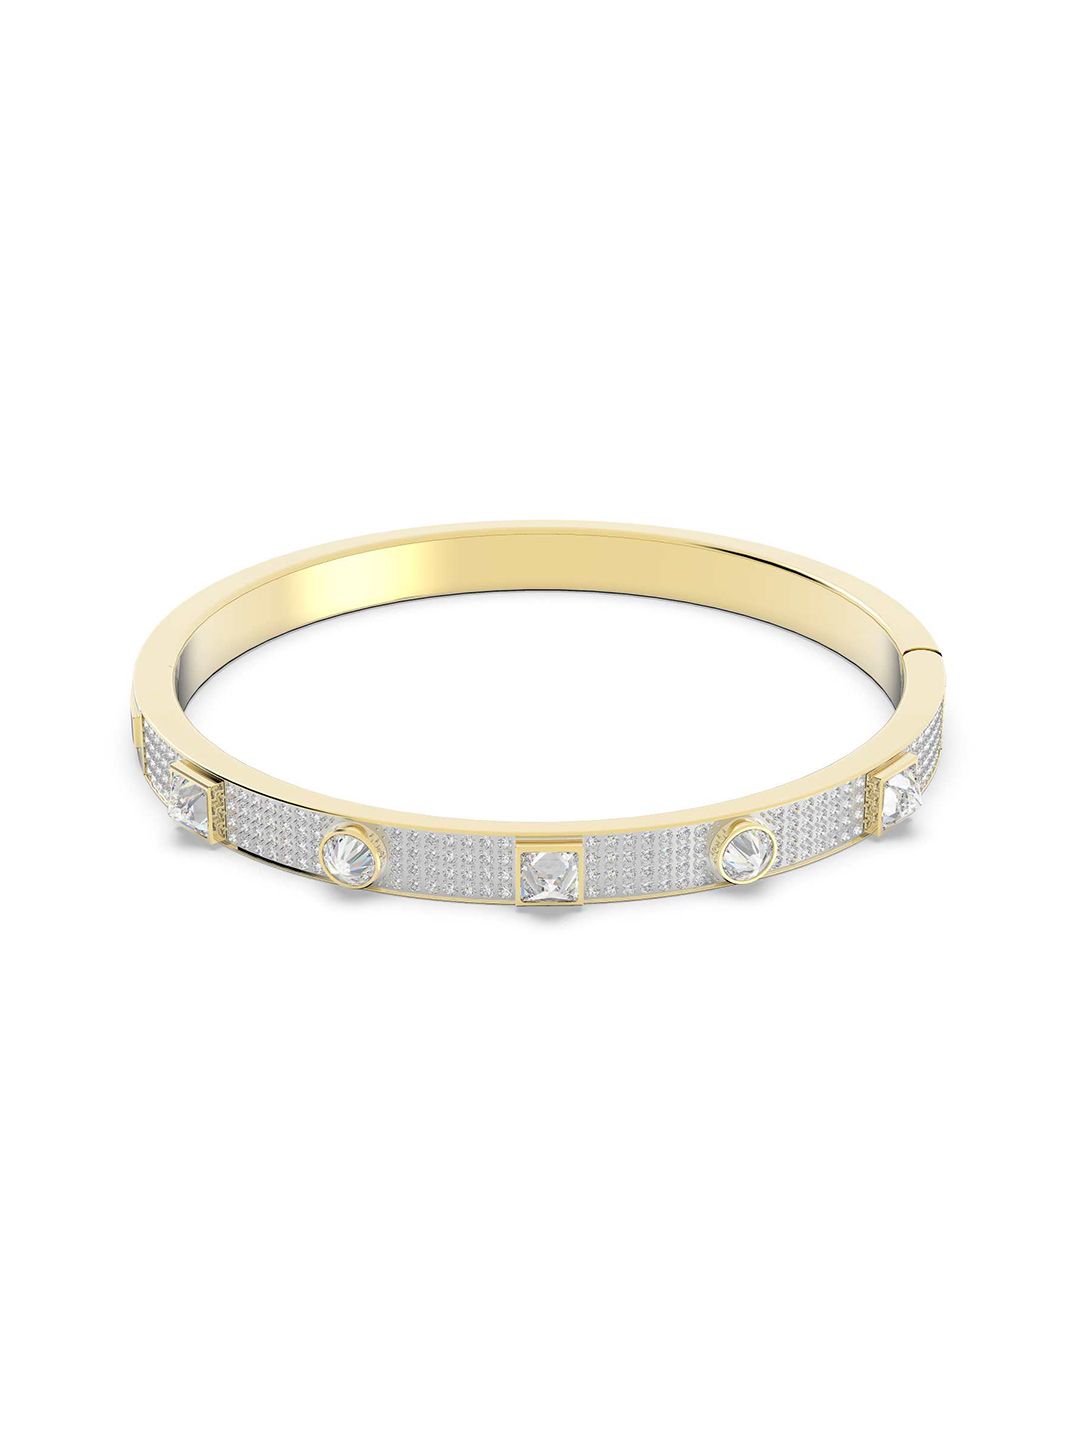 SWAROVSKI Women White Crystals Gold-Plated Bangle-Style Bracelet Price in India